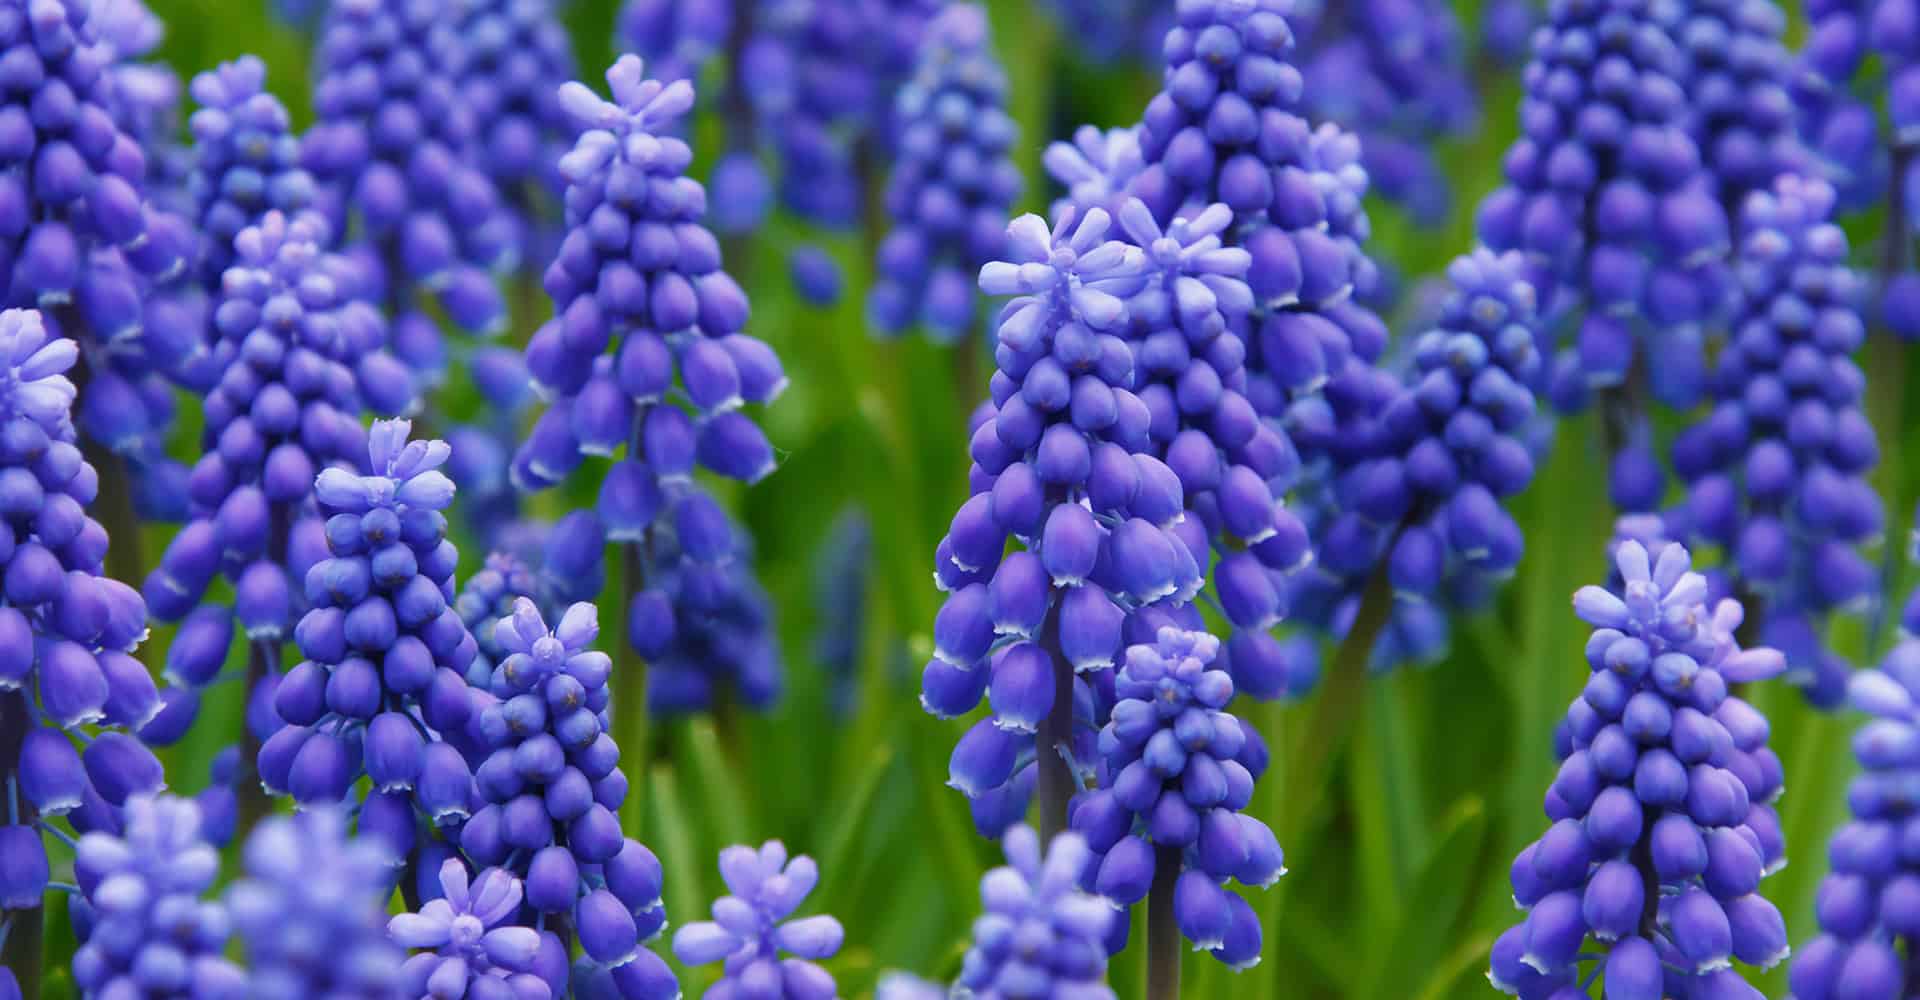 Hyacinth Care Guide: How To Grow Hyacinth | DIY Garden